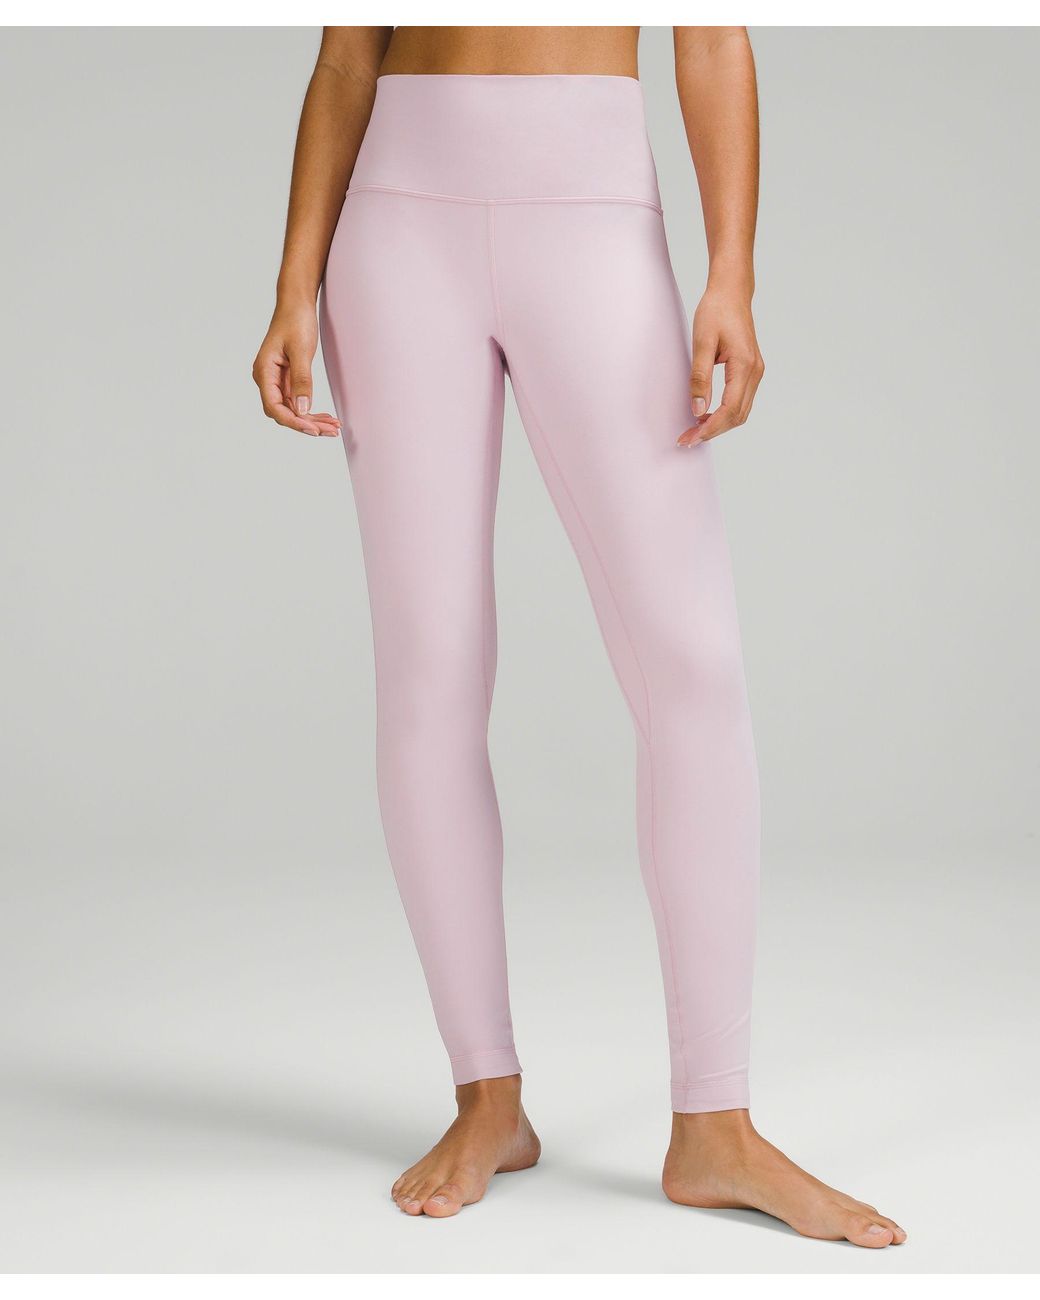 lululemon athletica Align High-rise Pants - 28 - Color Pink/pastel - Size  20